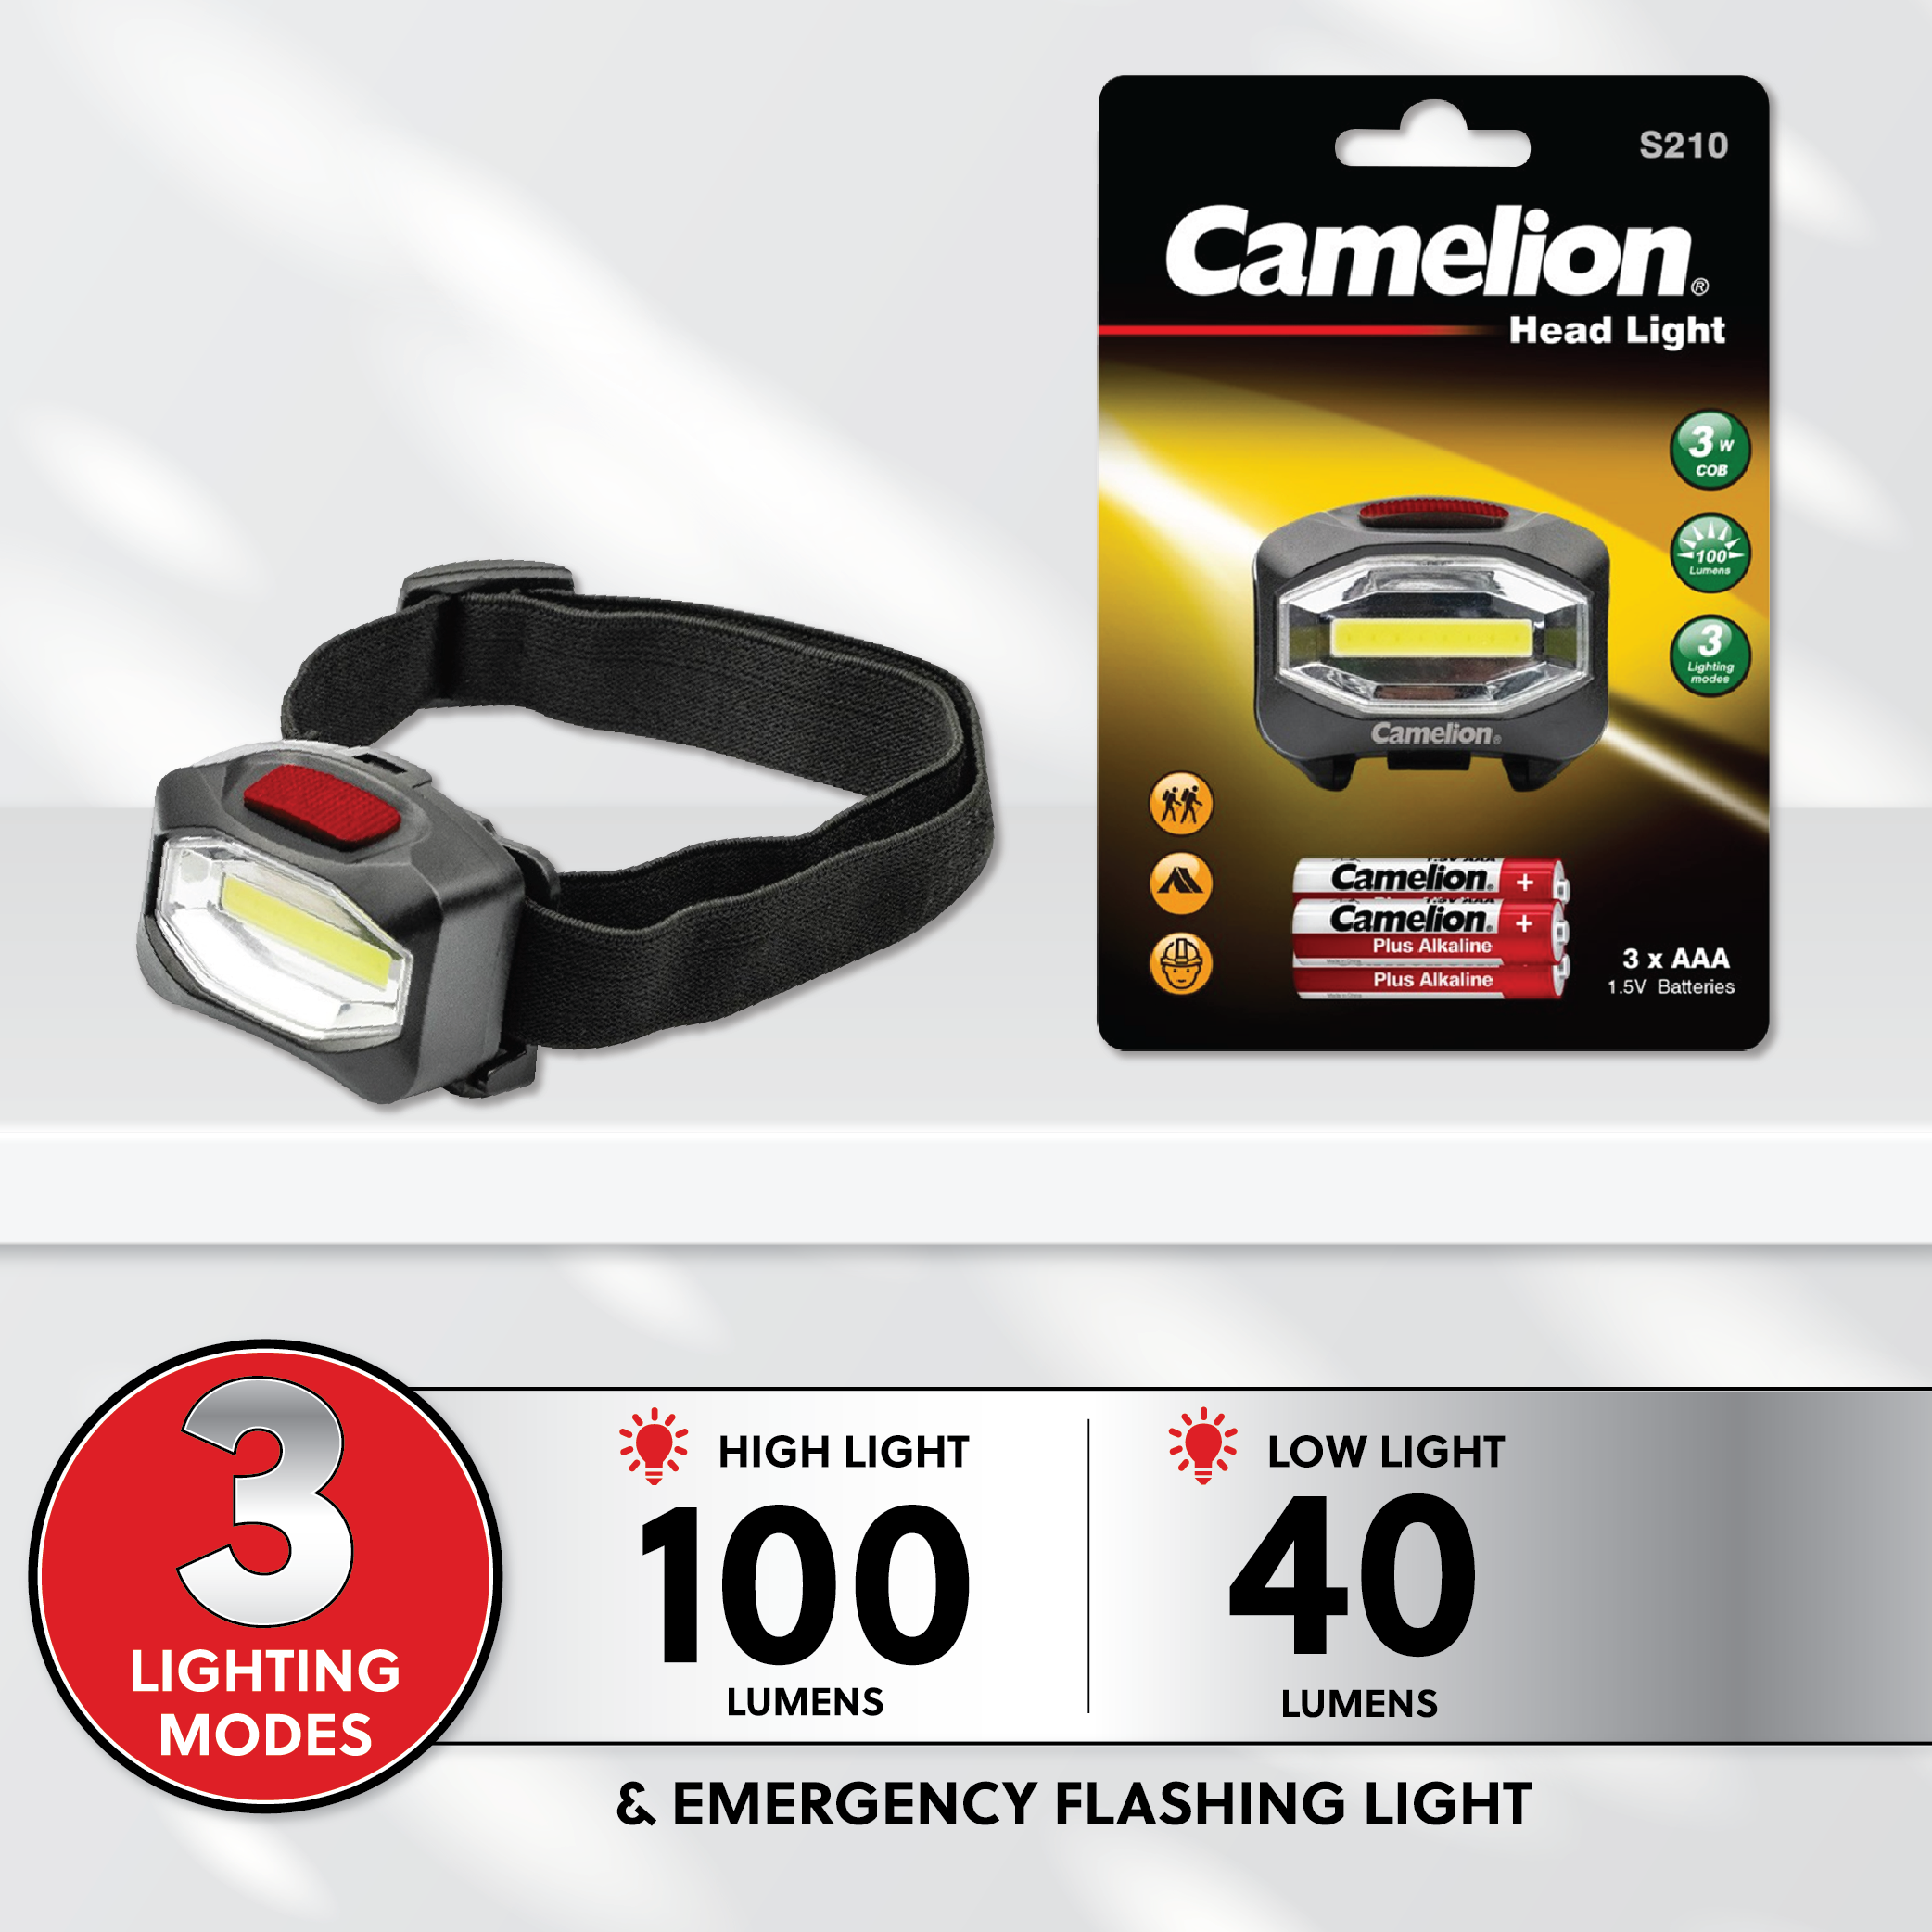 Camelion S210 Head Lamp Blister Pack of 1